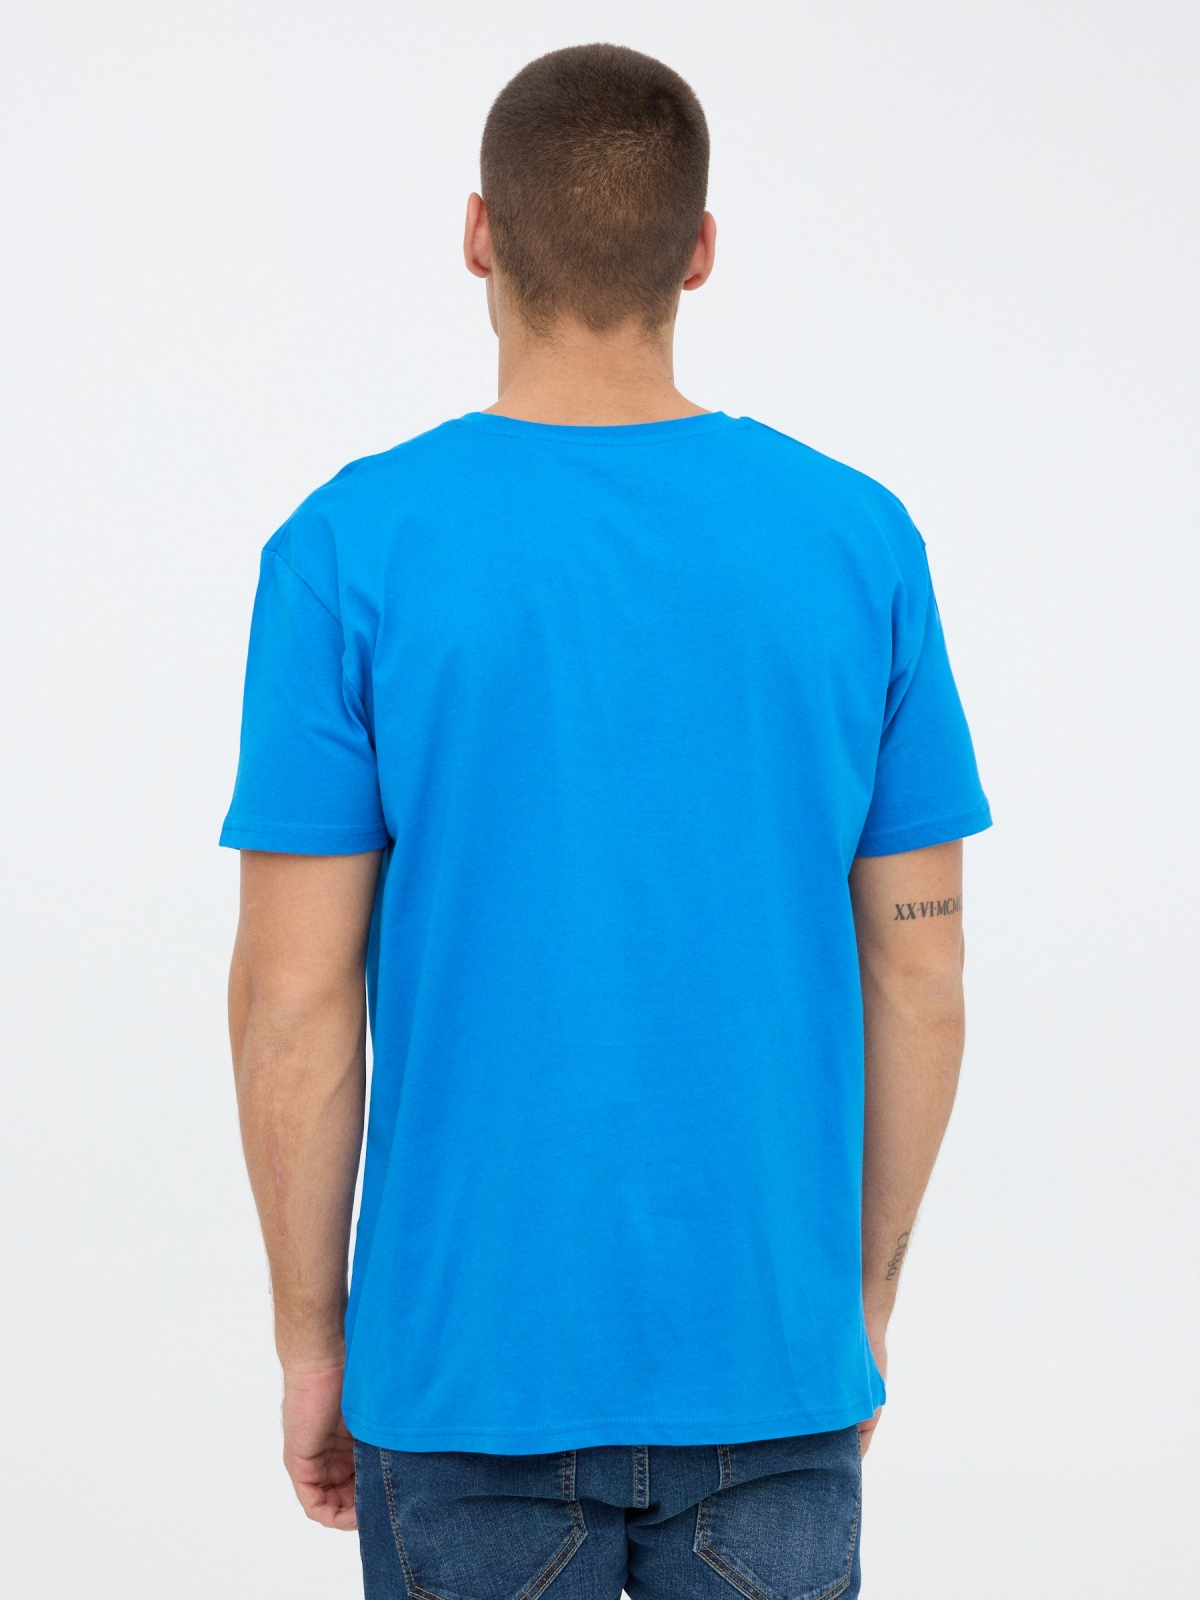 Camiseta Superman azul vista media trasera